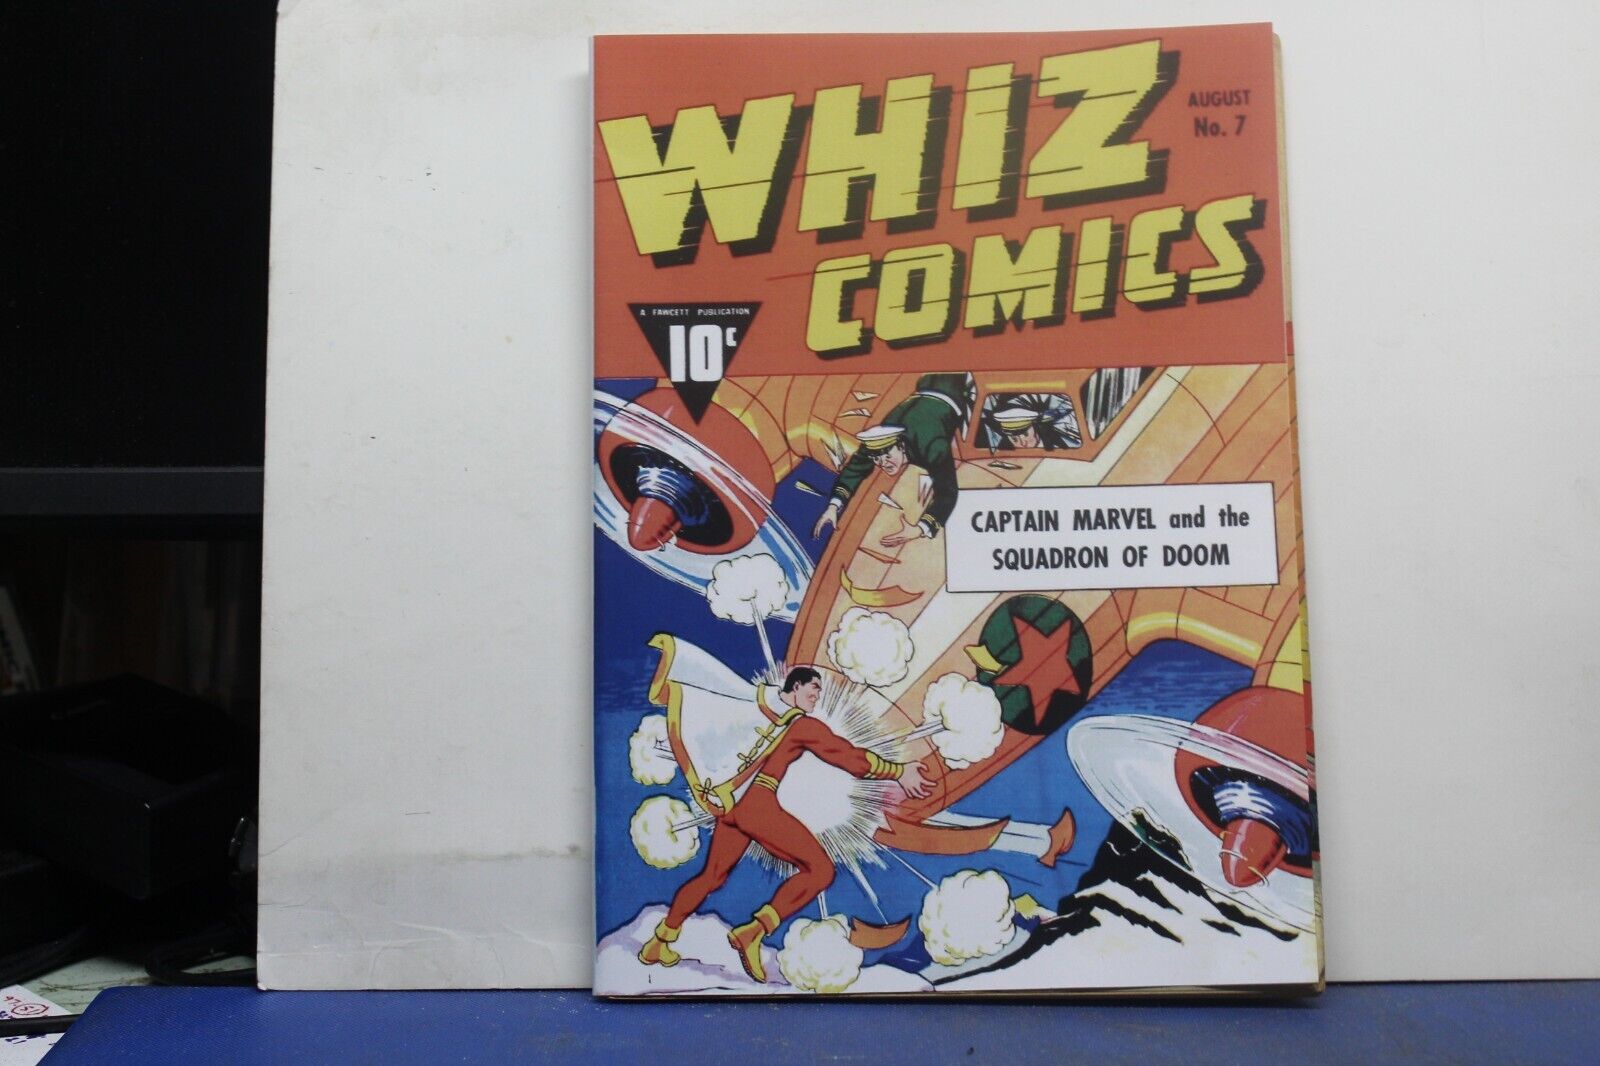 WHIZ COMICS #7 REPRO COVER OVER ORIGINAL COVER 1940